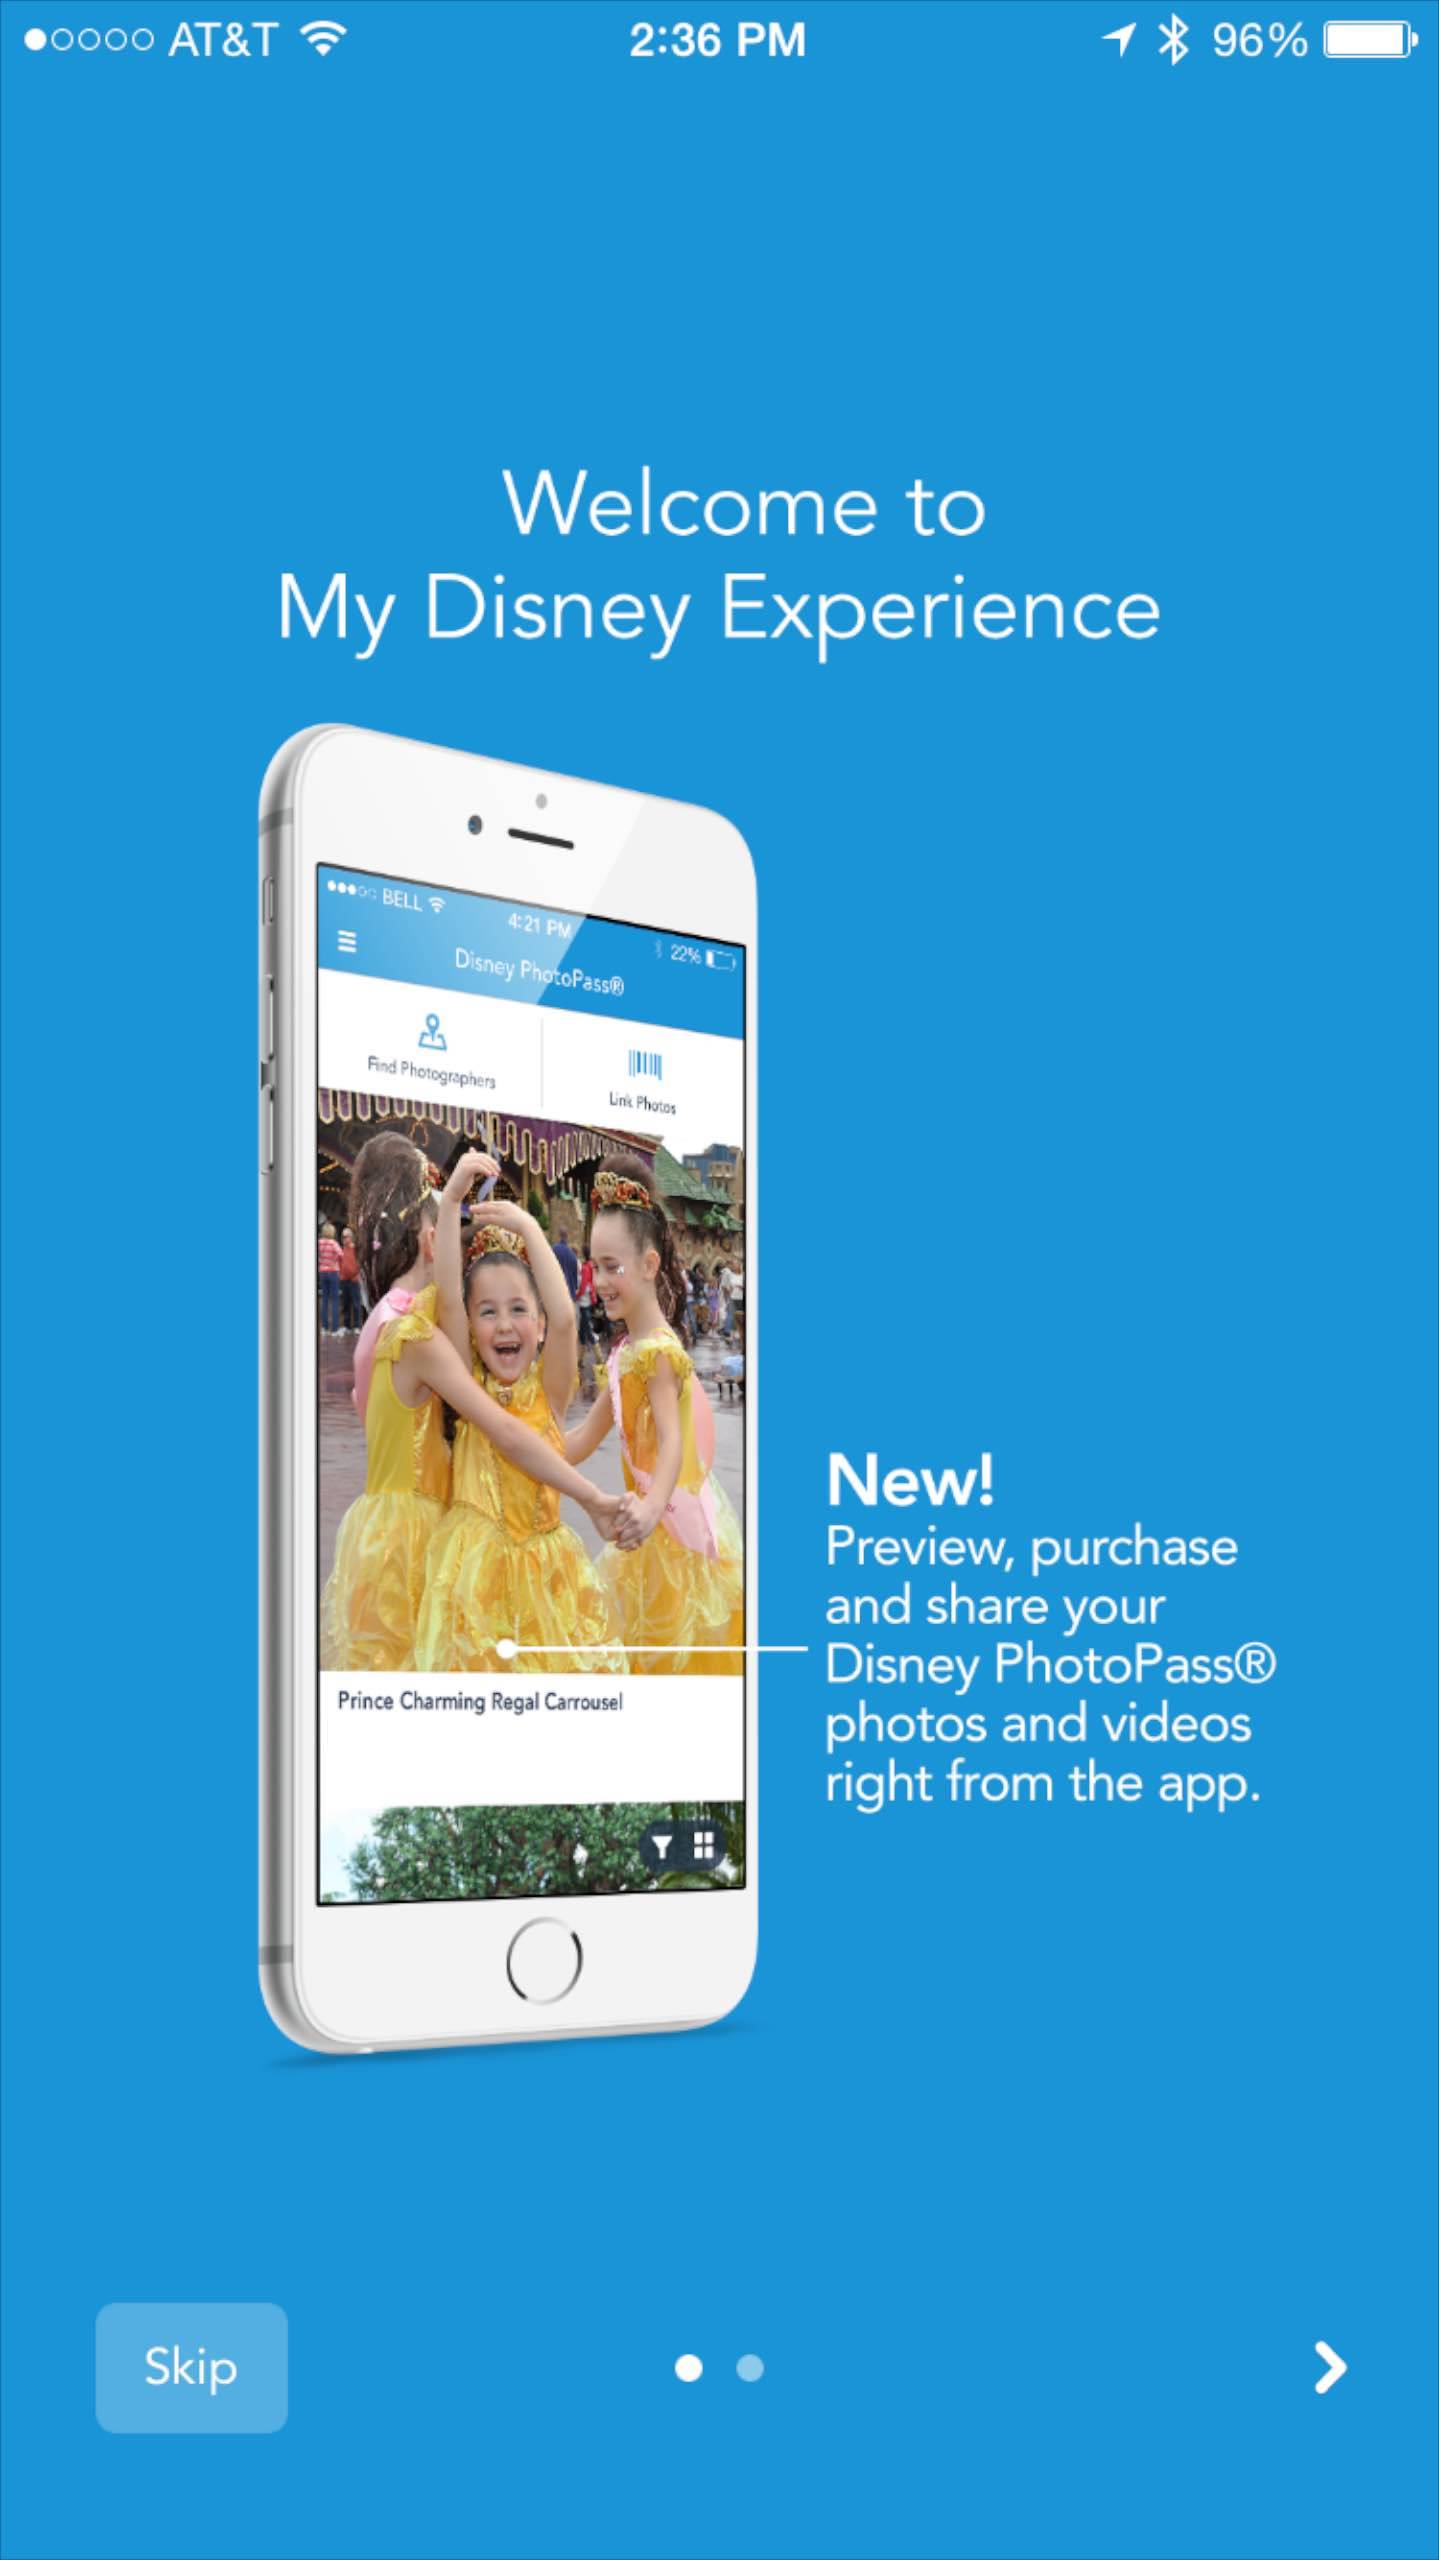 My Disney Experience PhotoPass screenshot - What's new